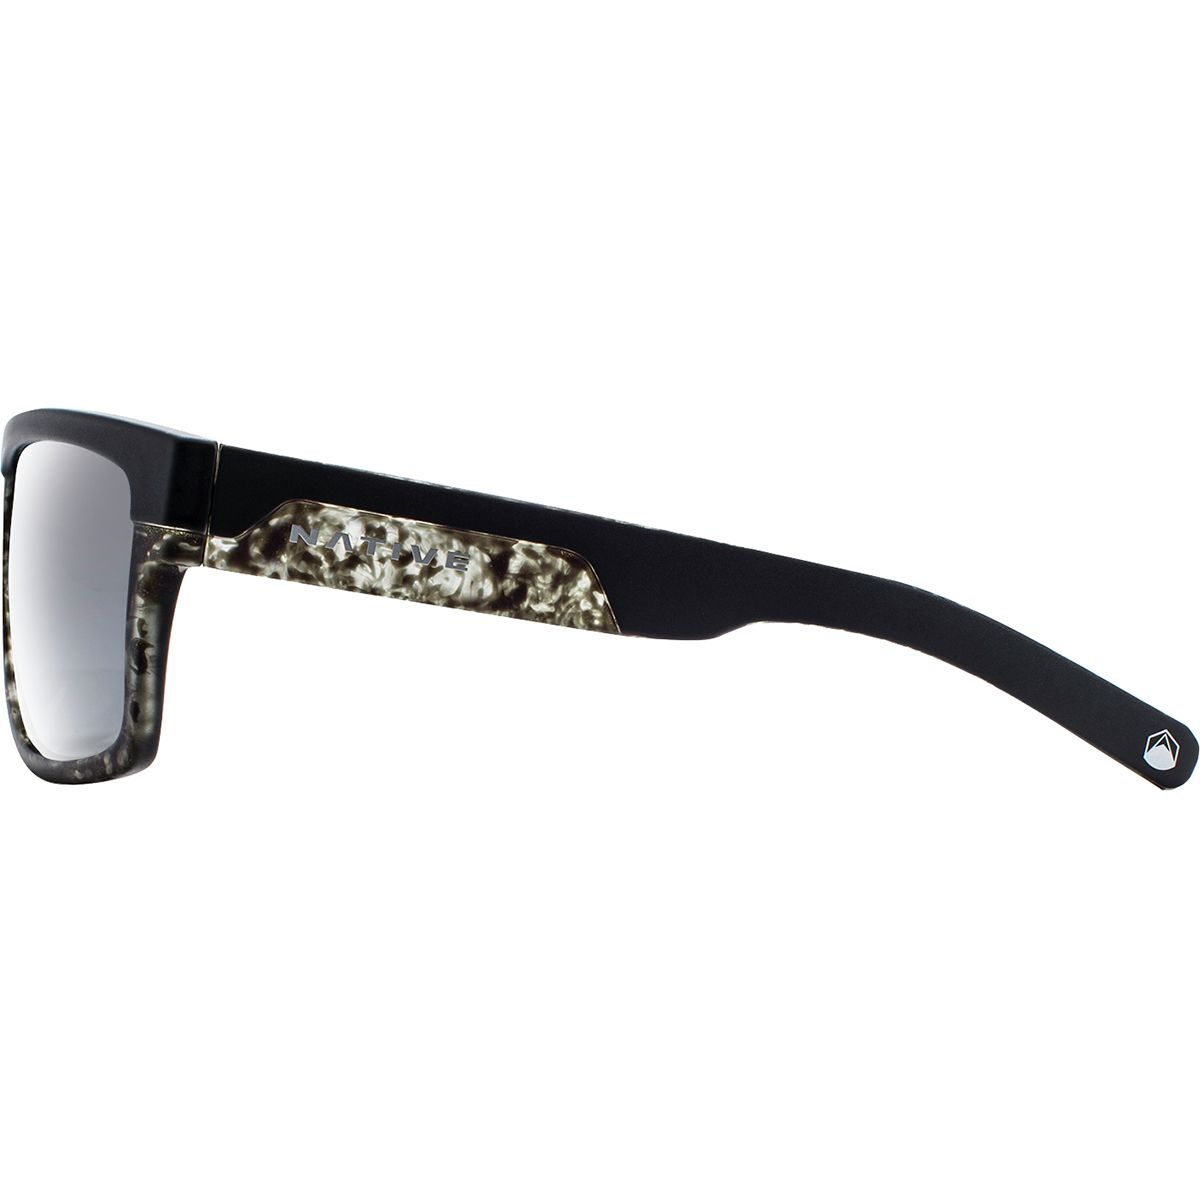  Native Eyewear El Jefe Polarized Sunglasses - Accessories